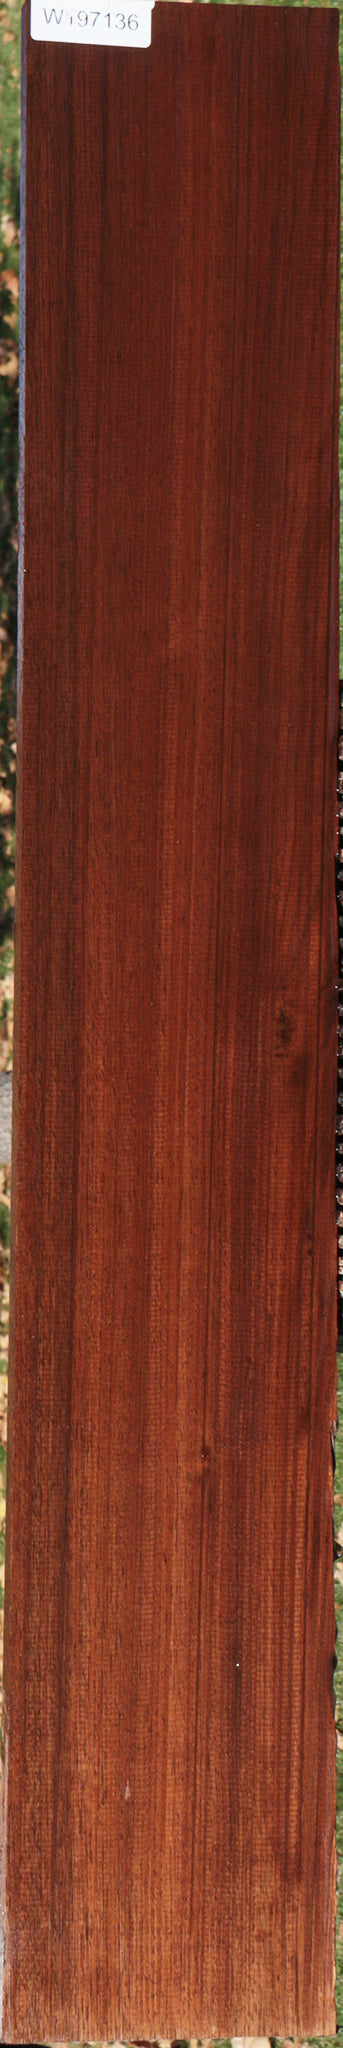 Peruvian Walnut Lumber